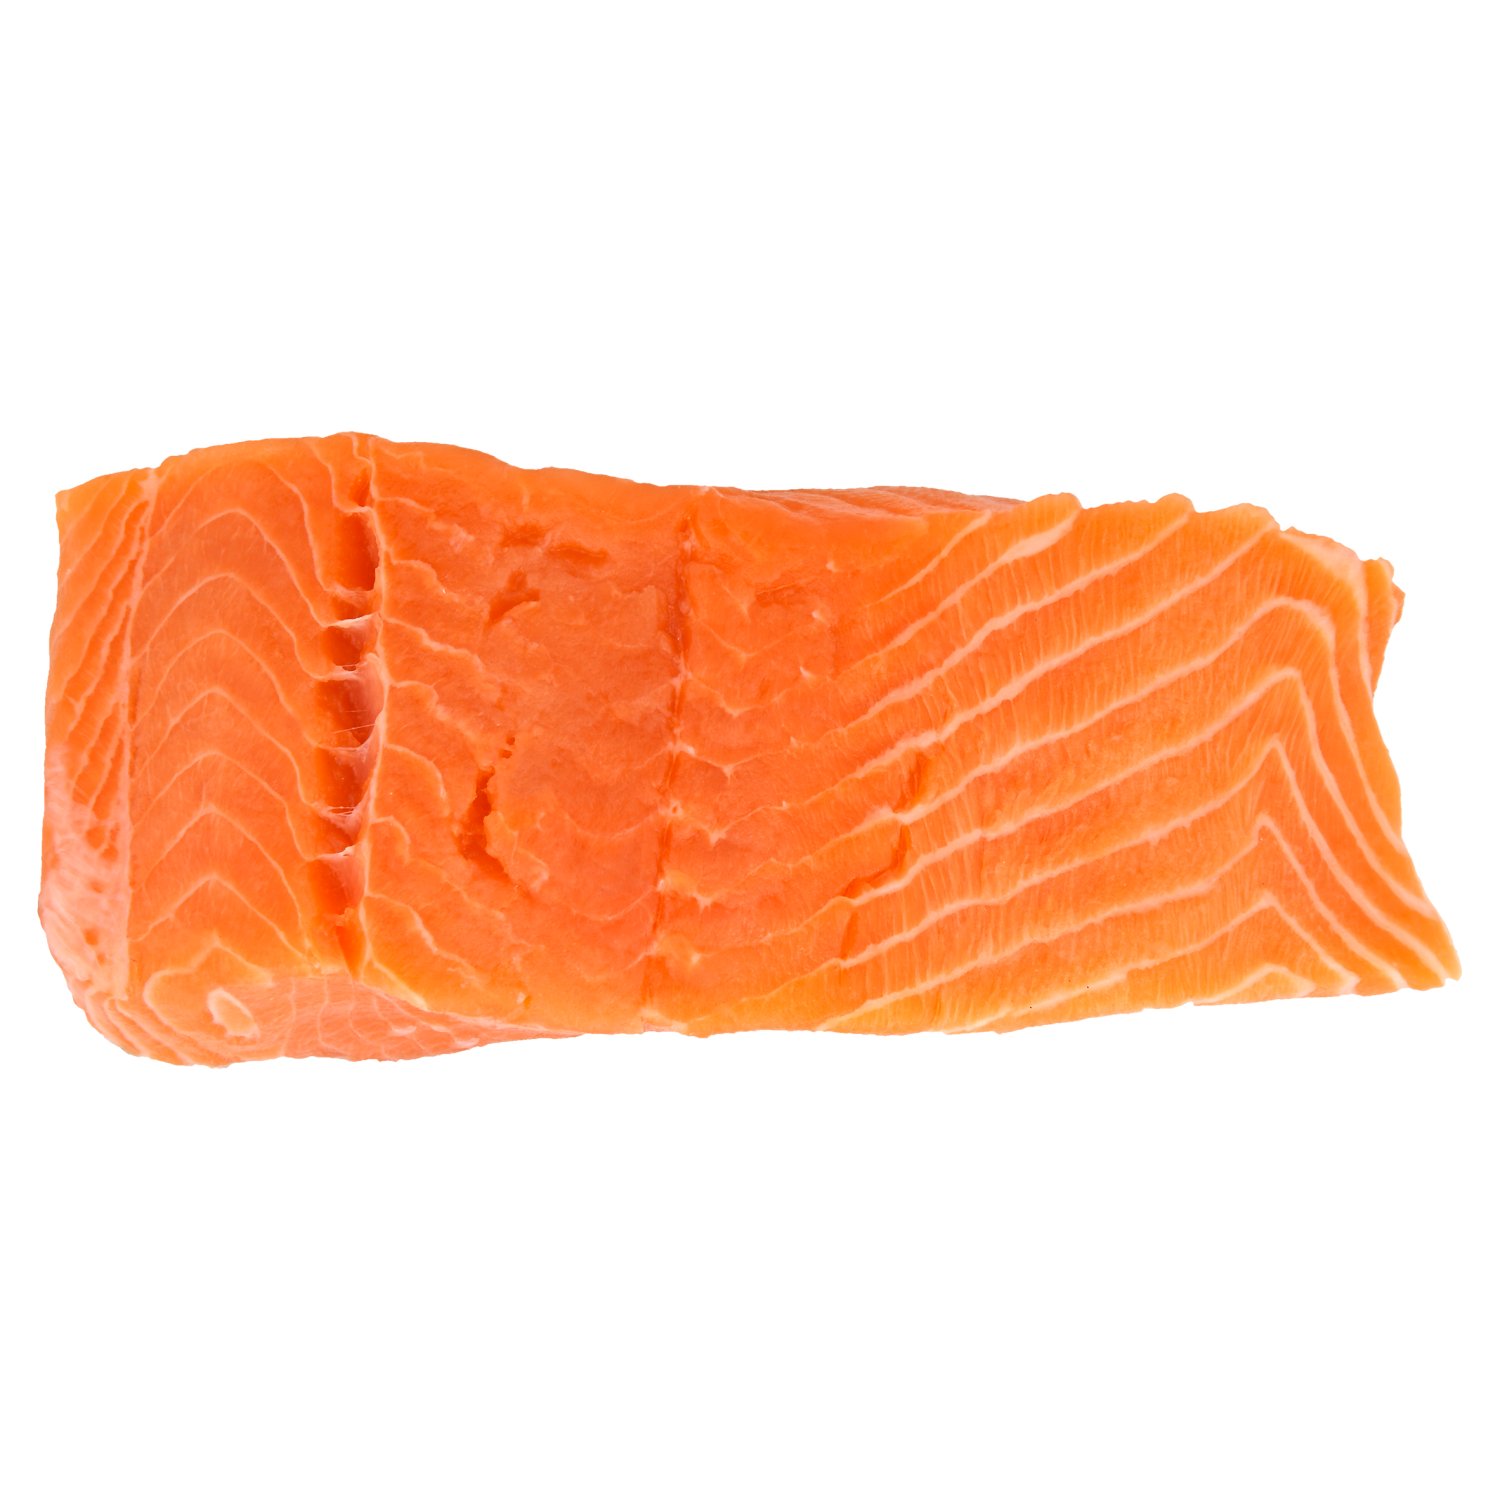 Loose Salmon Darnes (150 g)